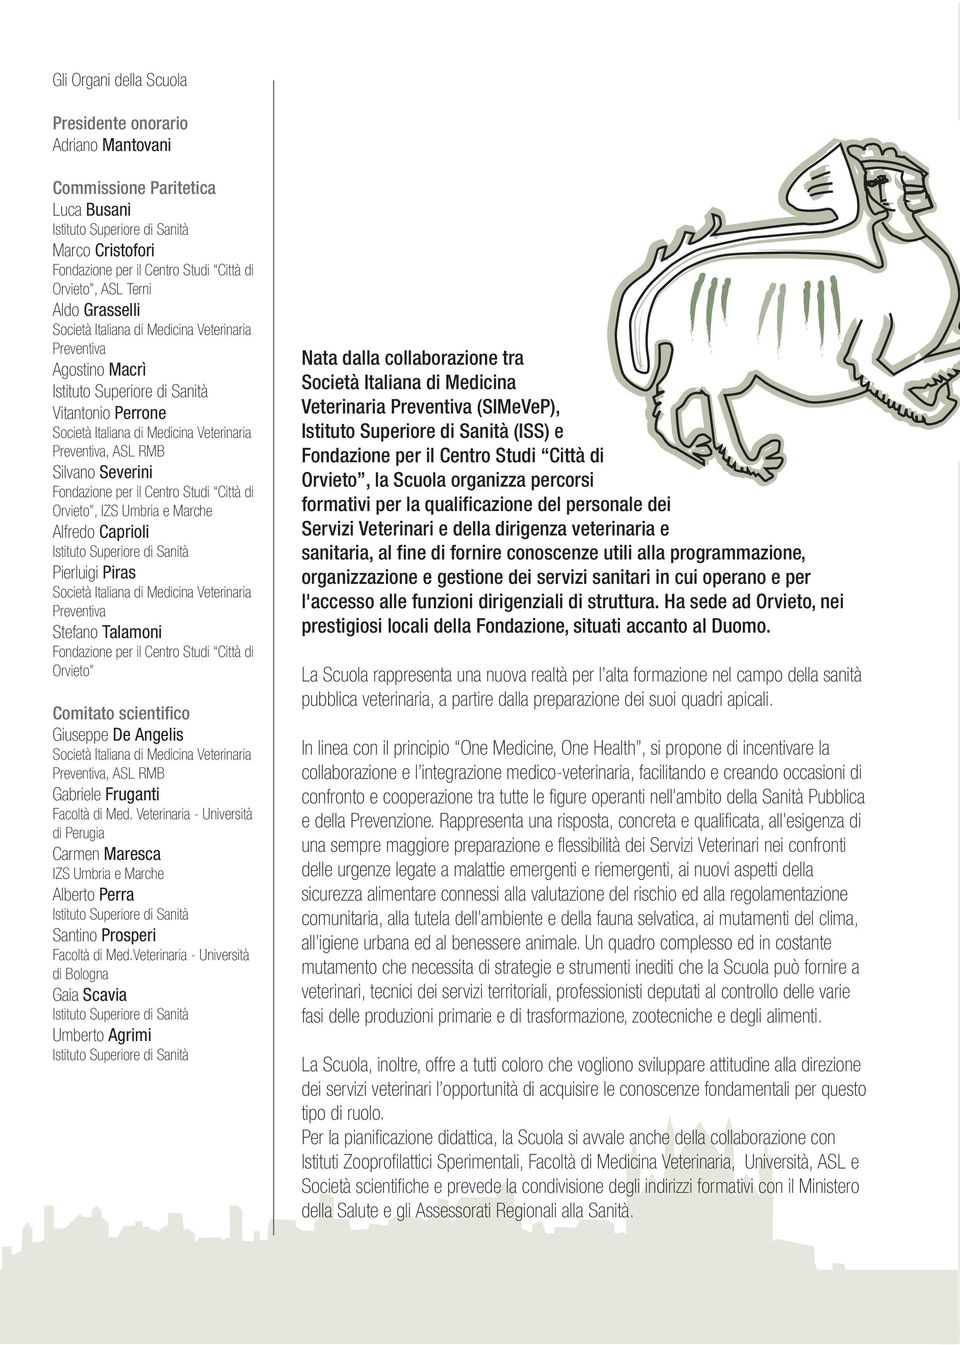 Gabriele Fruganti Facoltà di Med. Veterinaria - Università di Perugia Carmen Maresca IZS Umbria e Marche Alberto Perra Santino Prosperi Facoltà di Med.